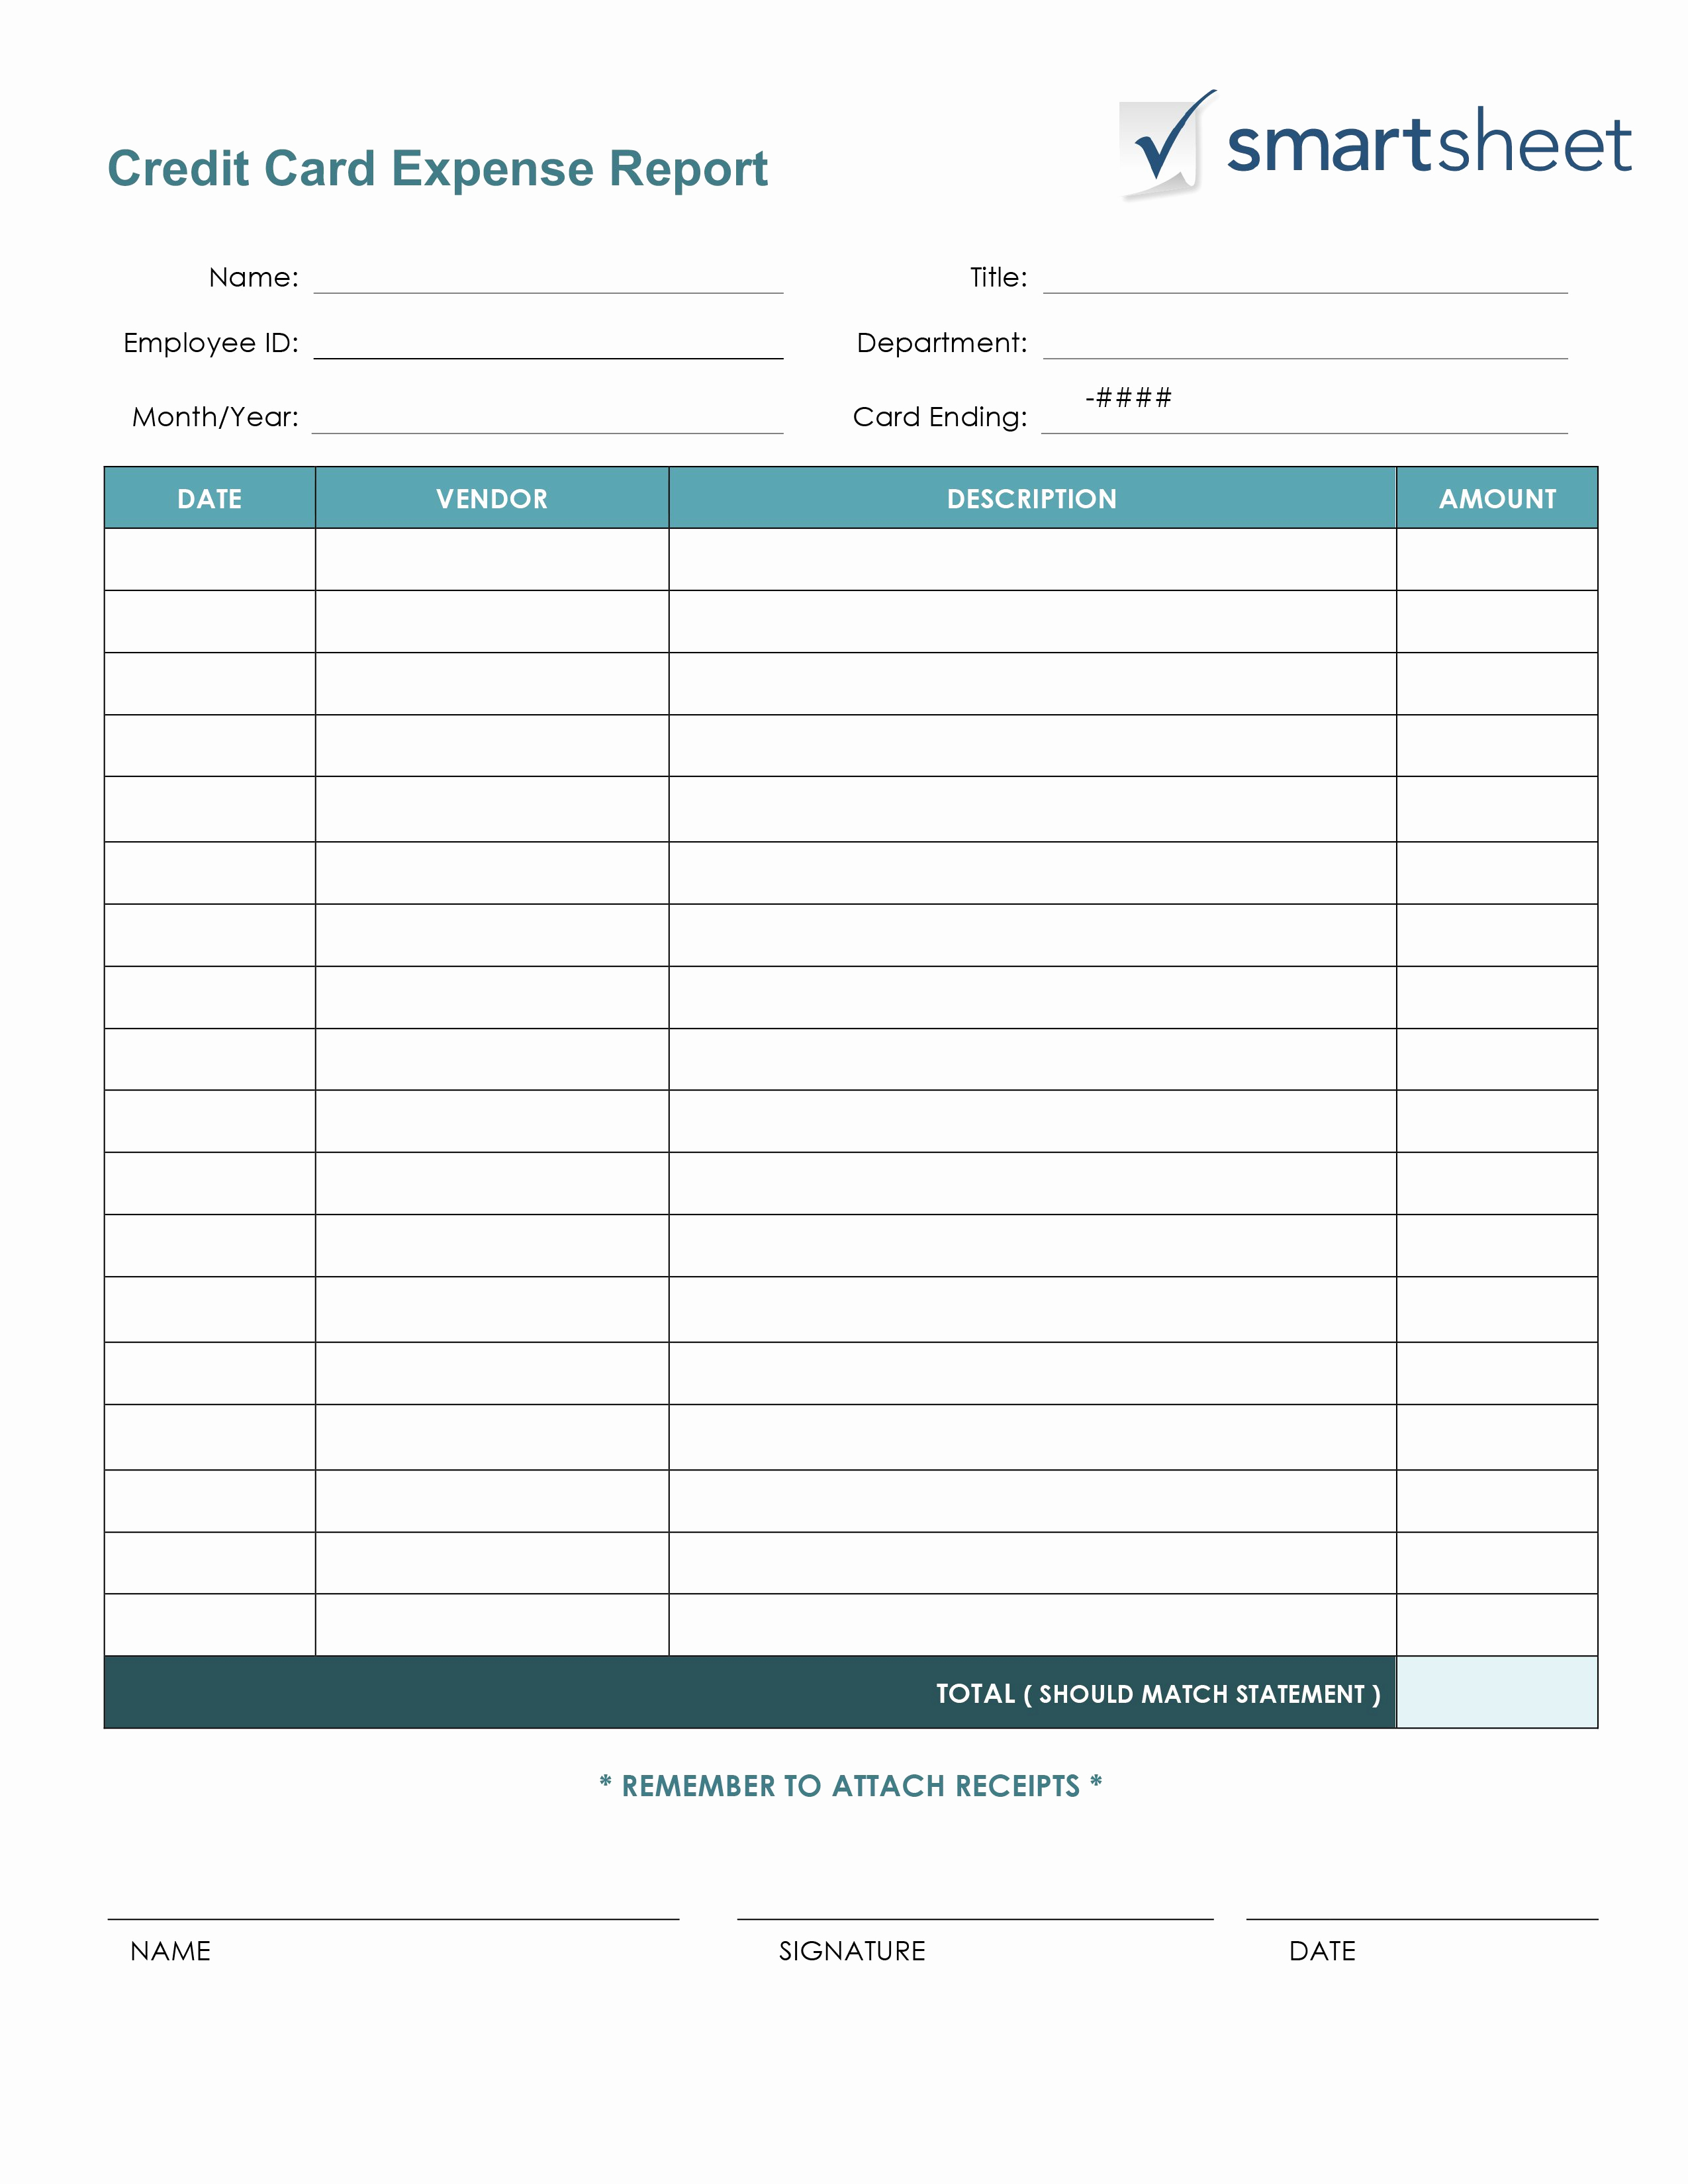 Expenses Report Template Excel Unique Free Expense Report Templates Smartsheet